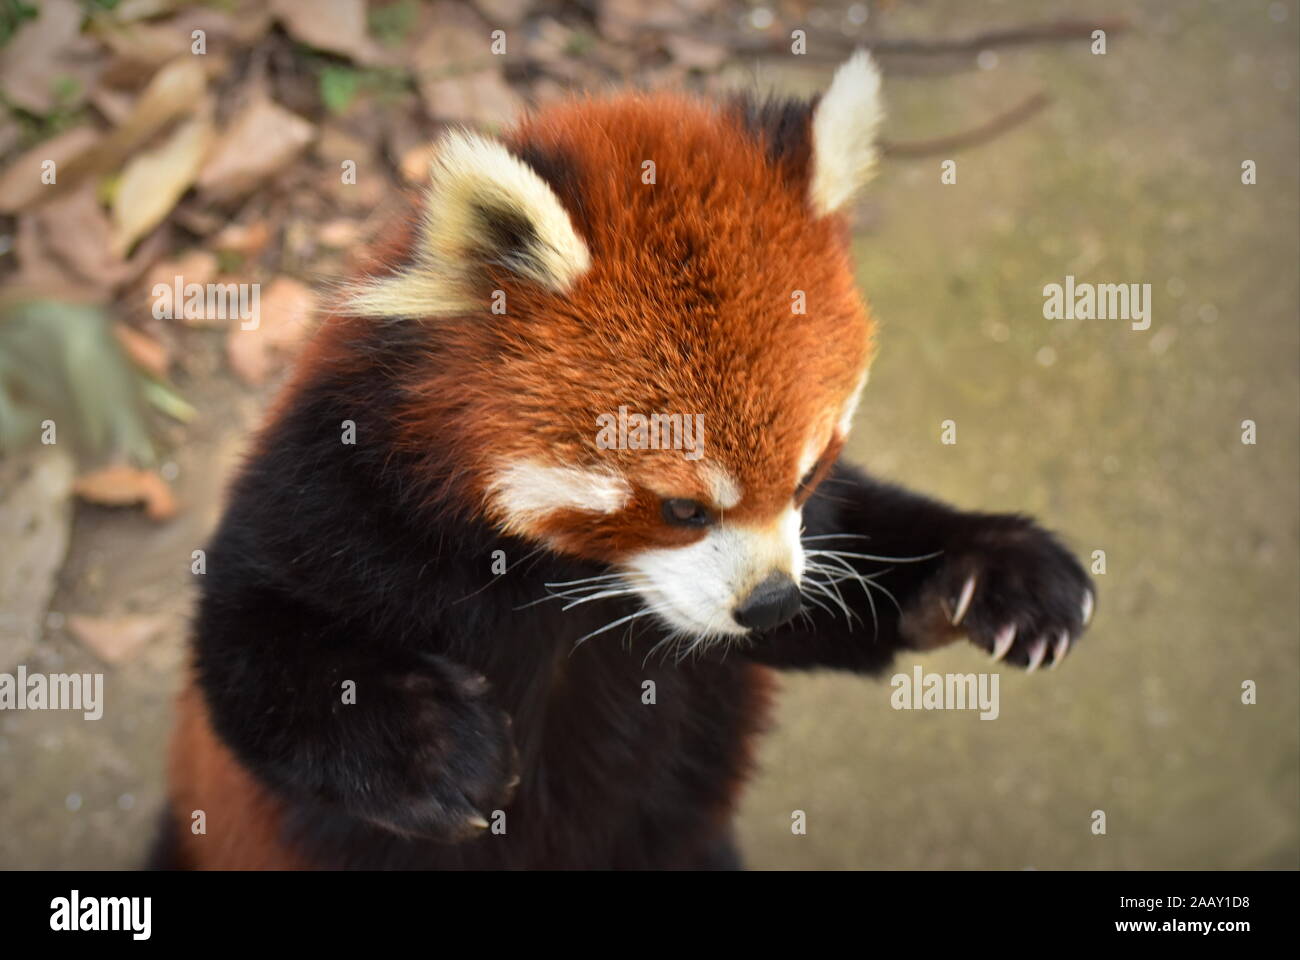 Süßer roter panda -Fotos und -Bildmaterial in hoher Auflösung – Alamy